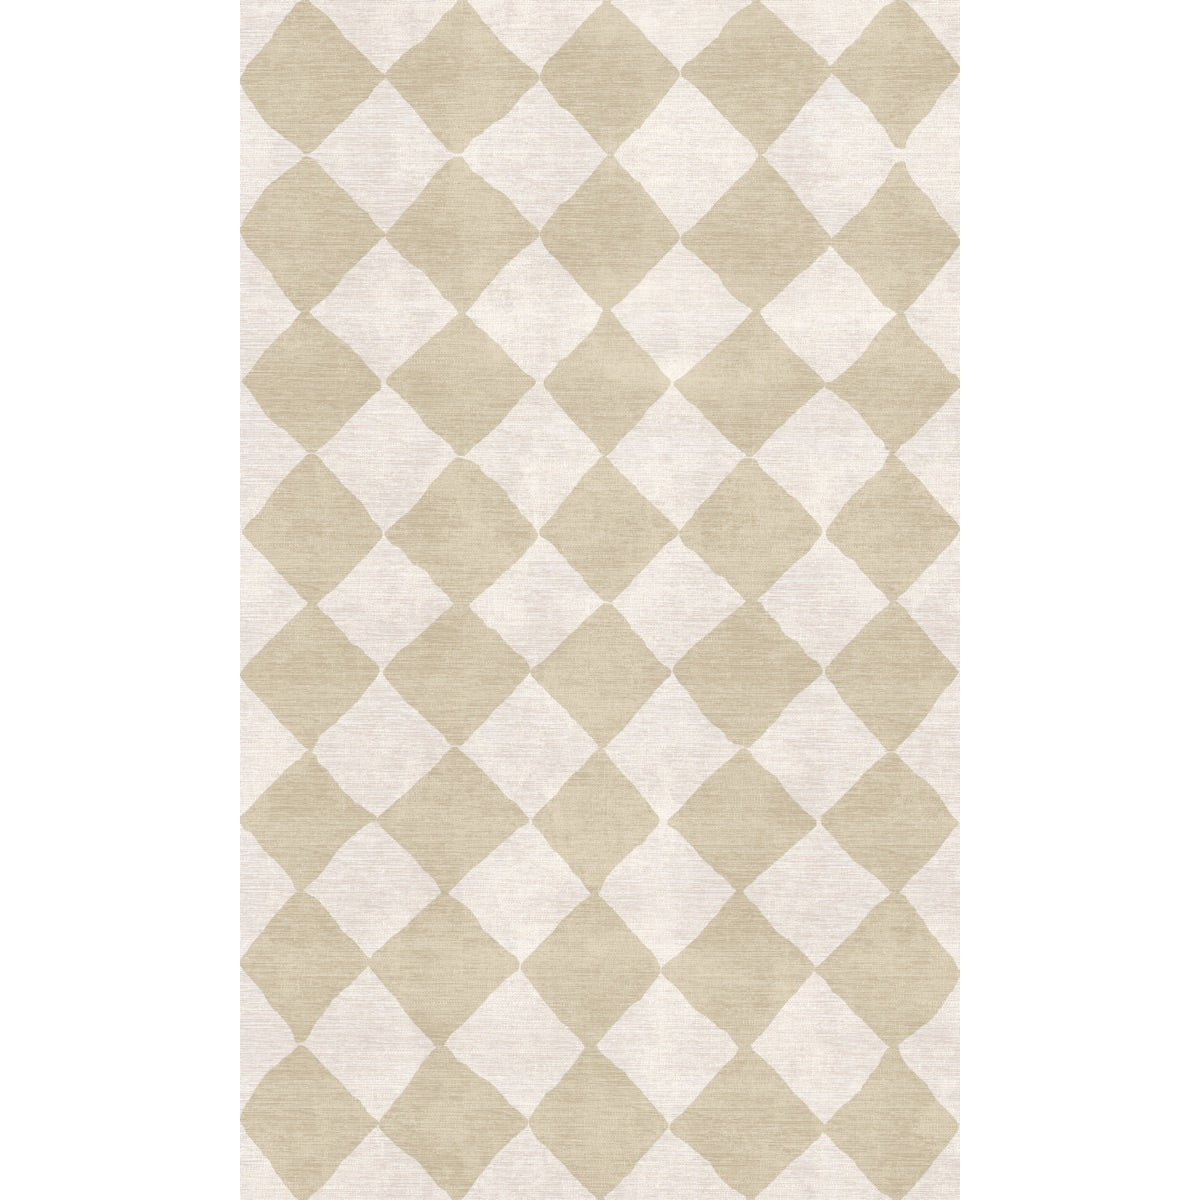 Trestres Checkered Natural & Ivory Rug